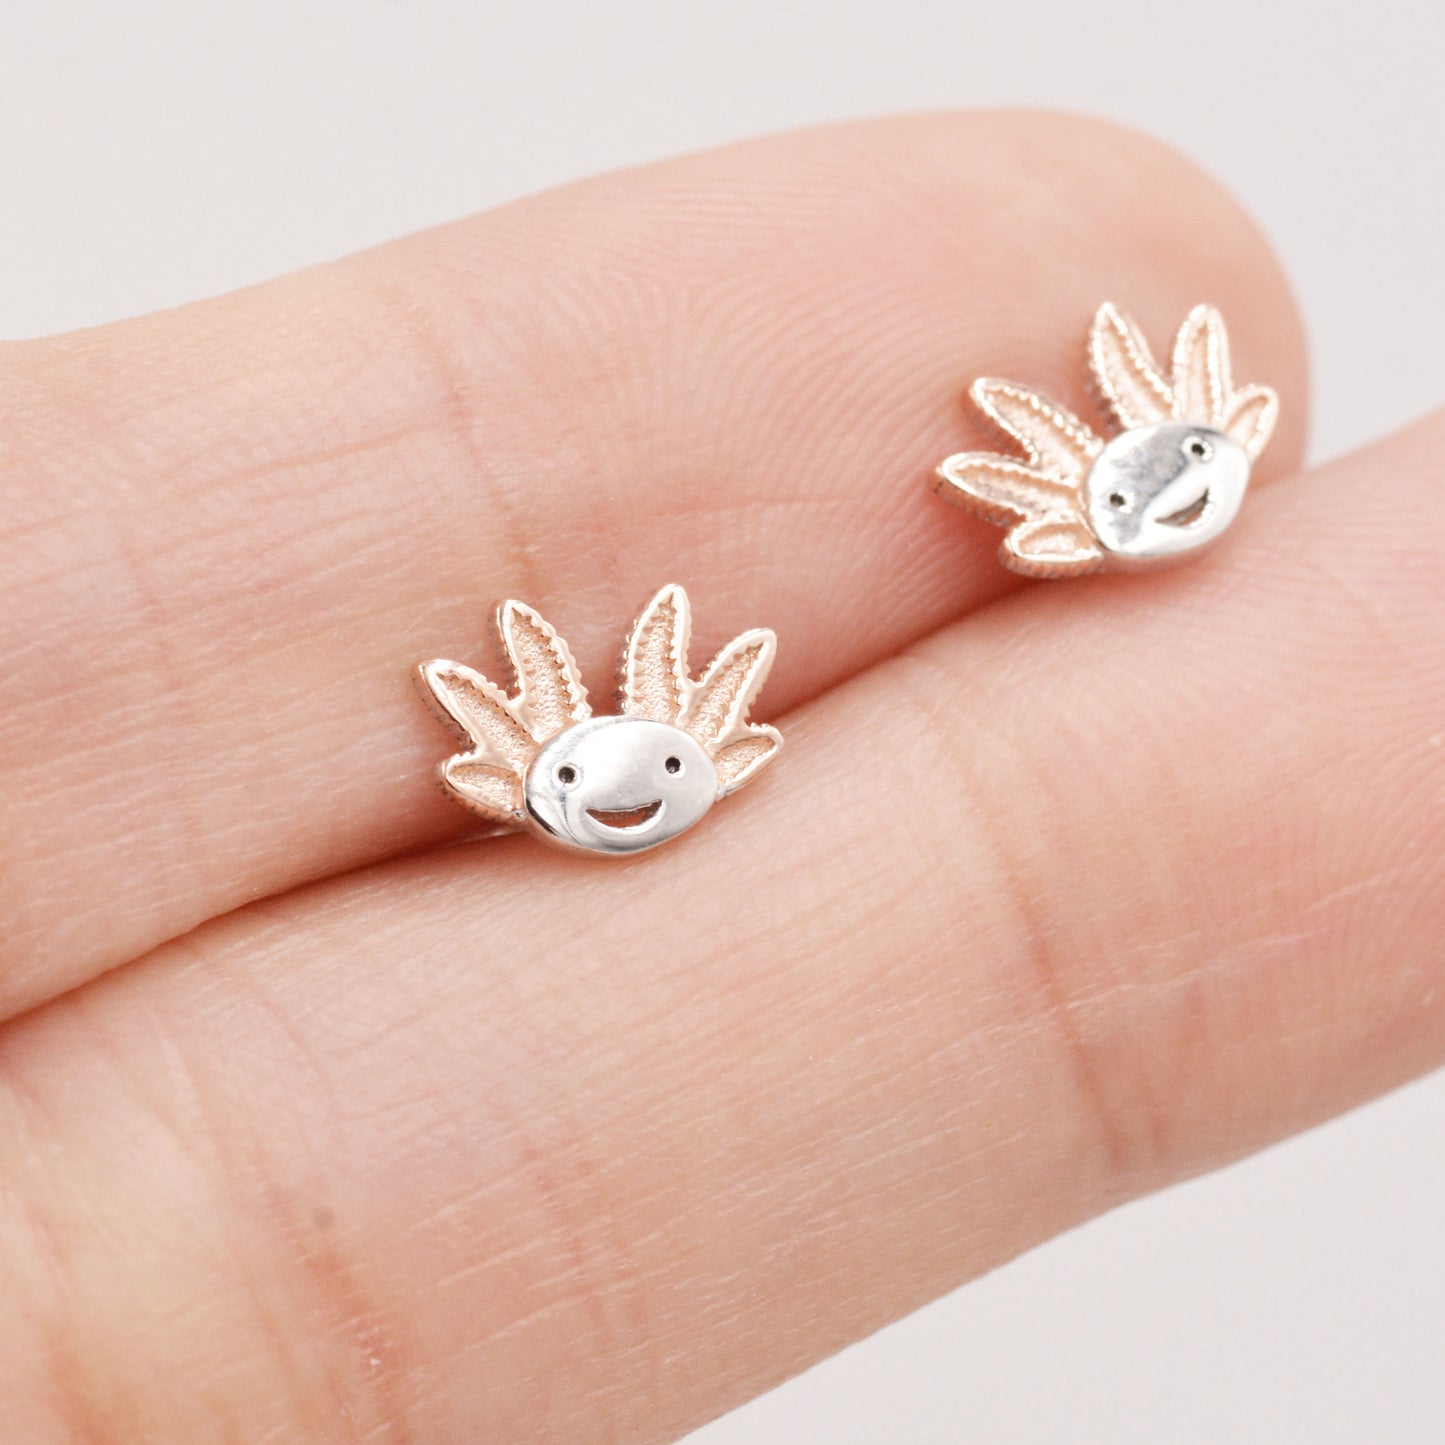 Axolotl Stud Earrings in Sterling Silver - Sea Creature Stud Earrings - Tiny Earrings - Pet Lover - Cute,  Fun, Whimsical